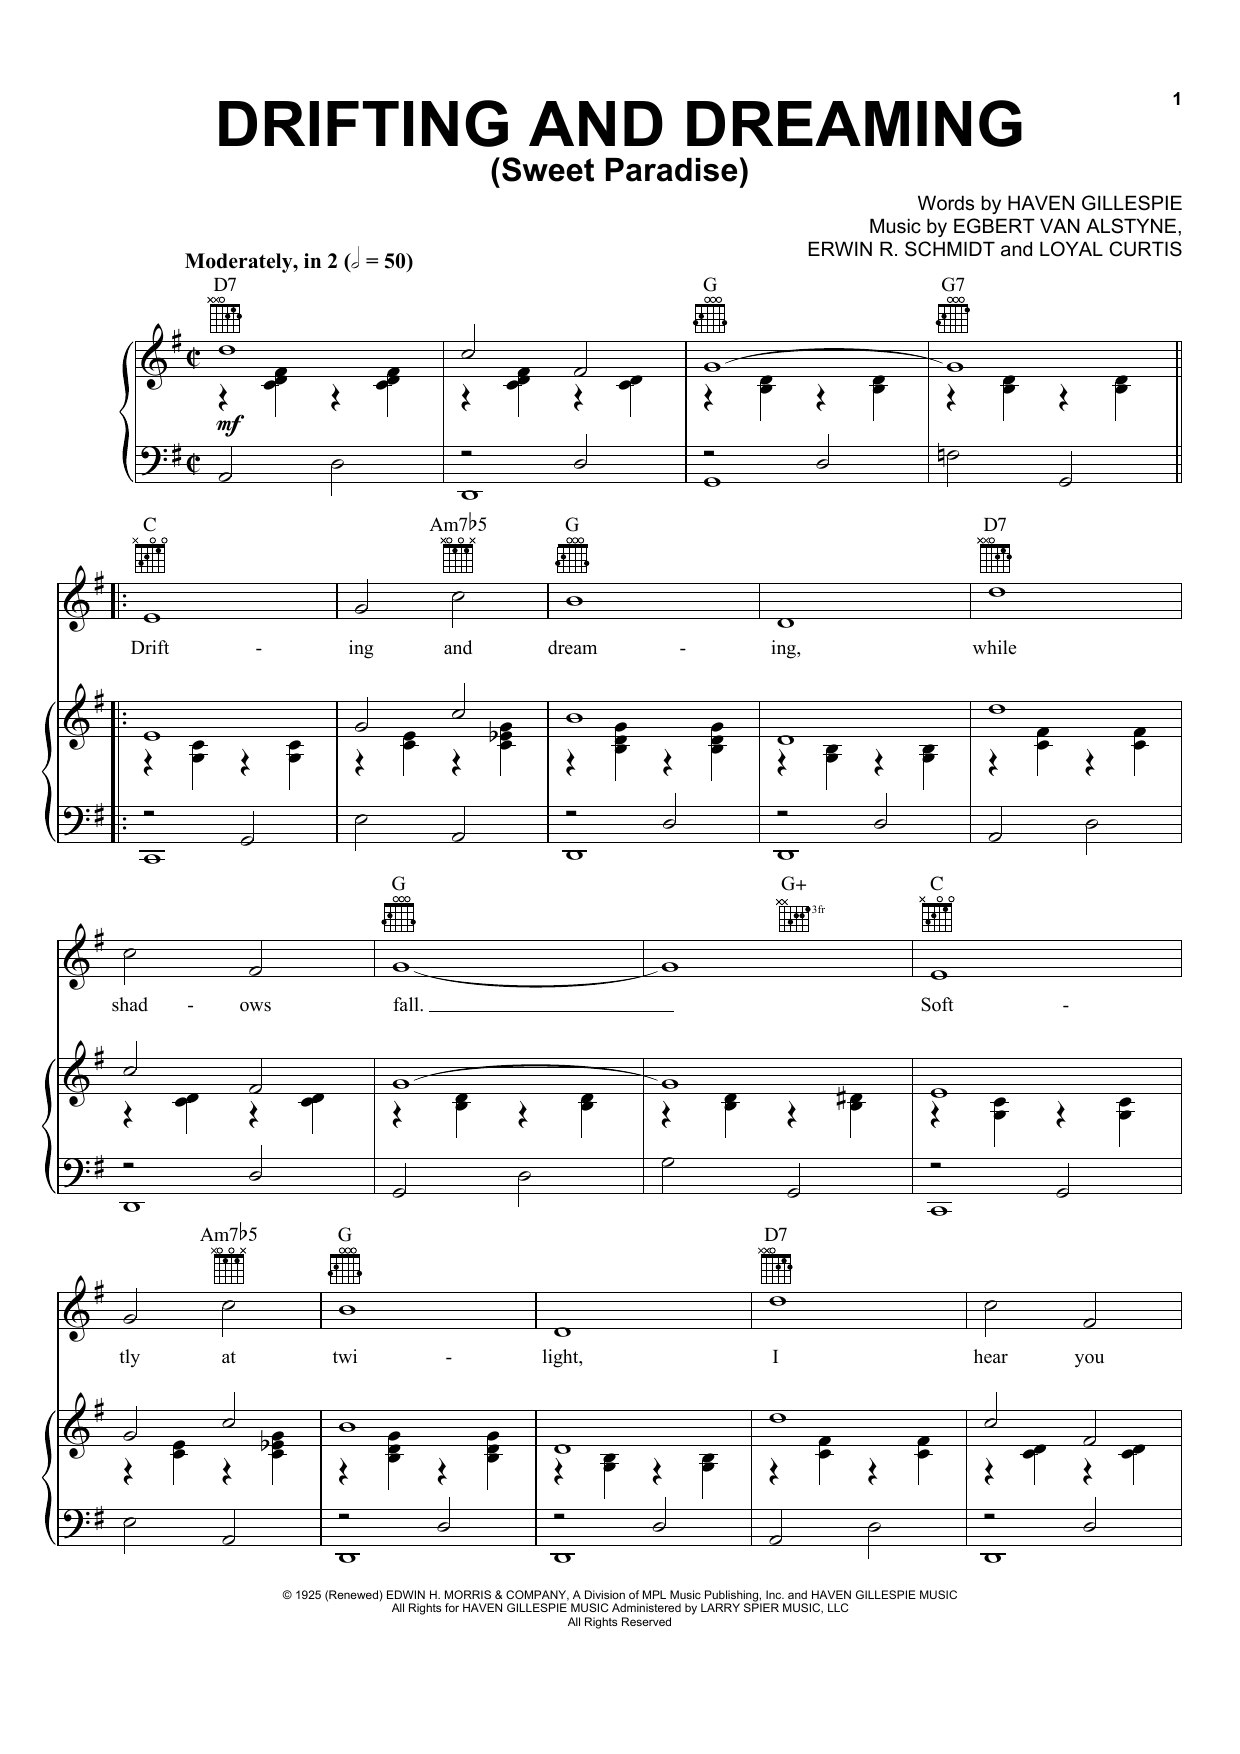 Egbert Van Alstyne Drifting And Dreaming (Sweet Paradise) Sheet Music Notes & Chords for Melody Line, Lyrics & Chords - Download or Print PDF